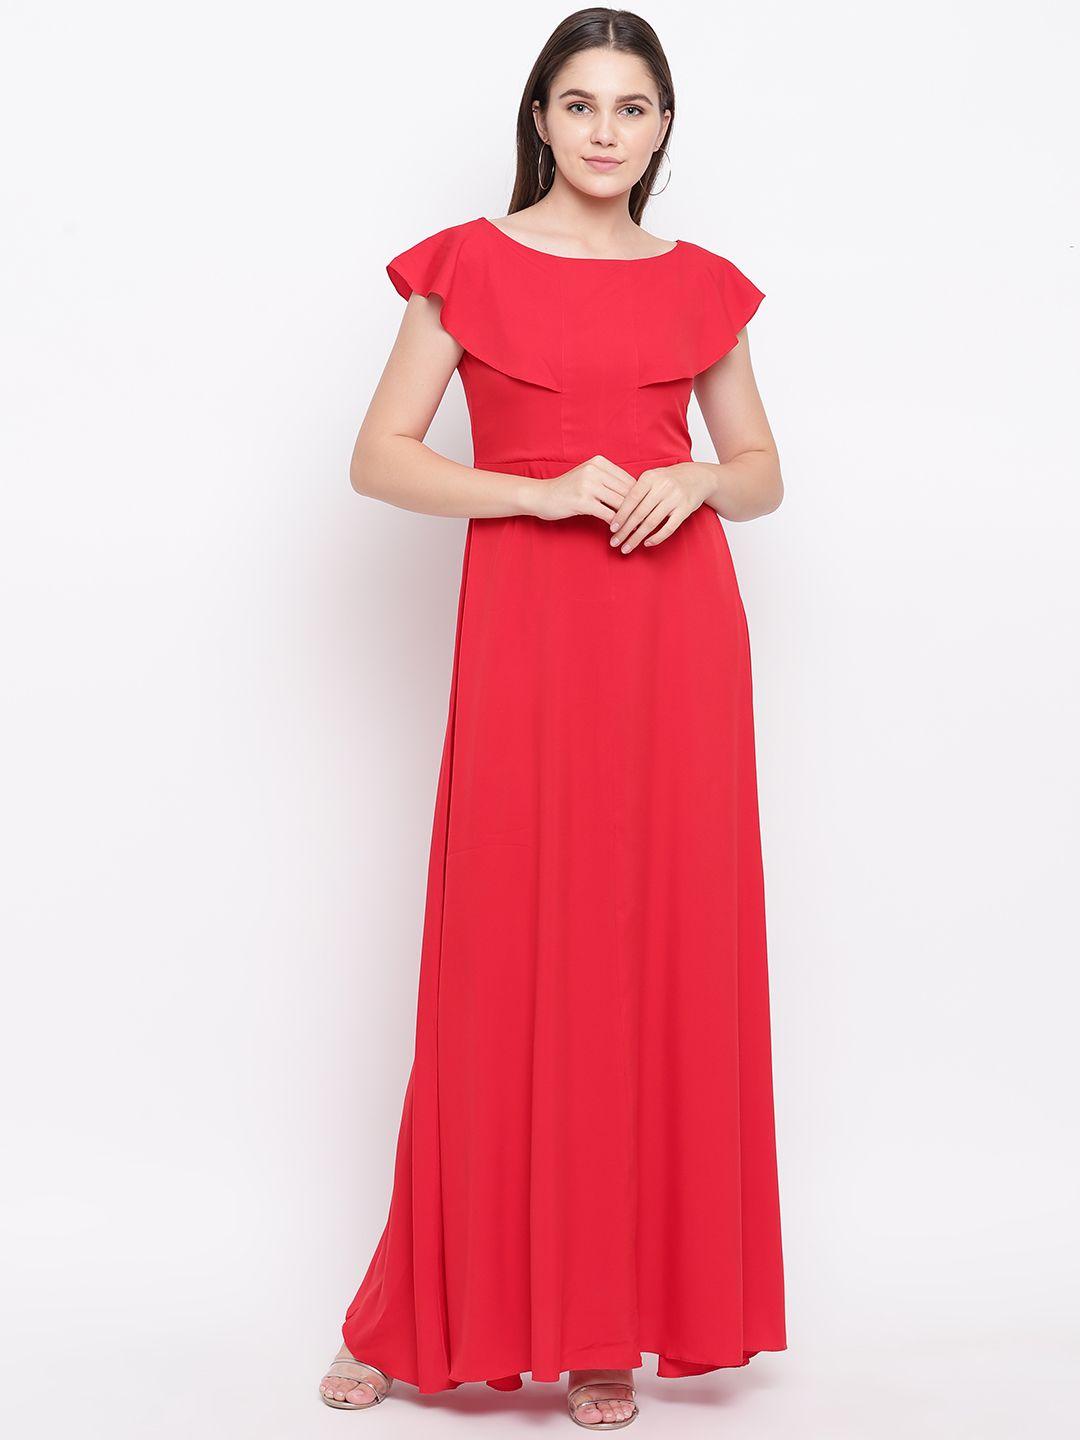 uptownie-lite-women-red-solid-maxi-dress